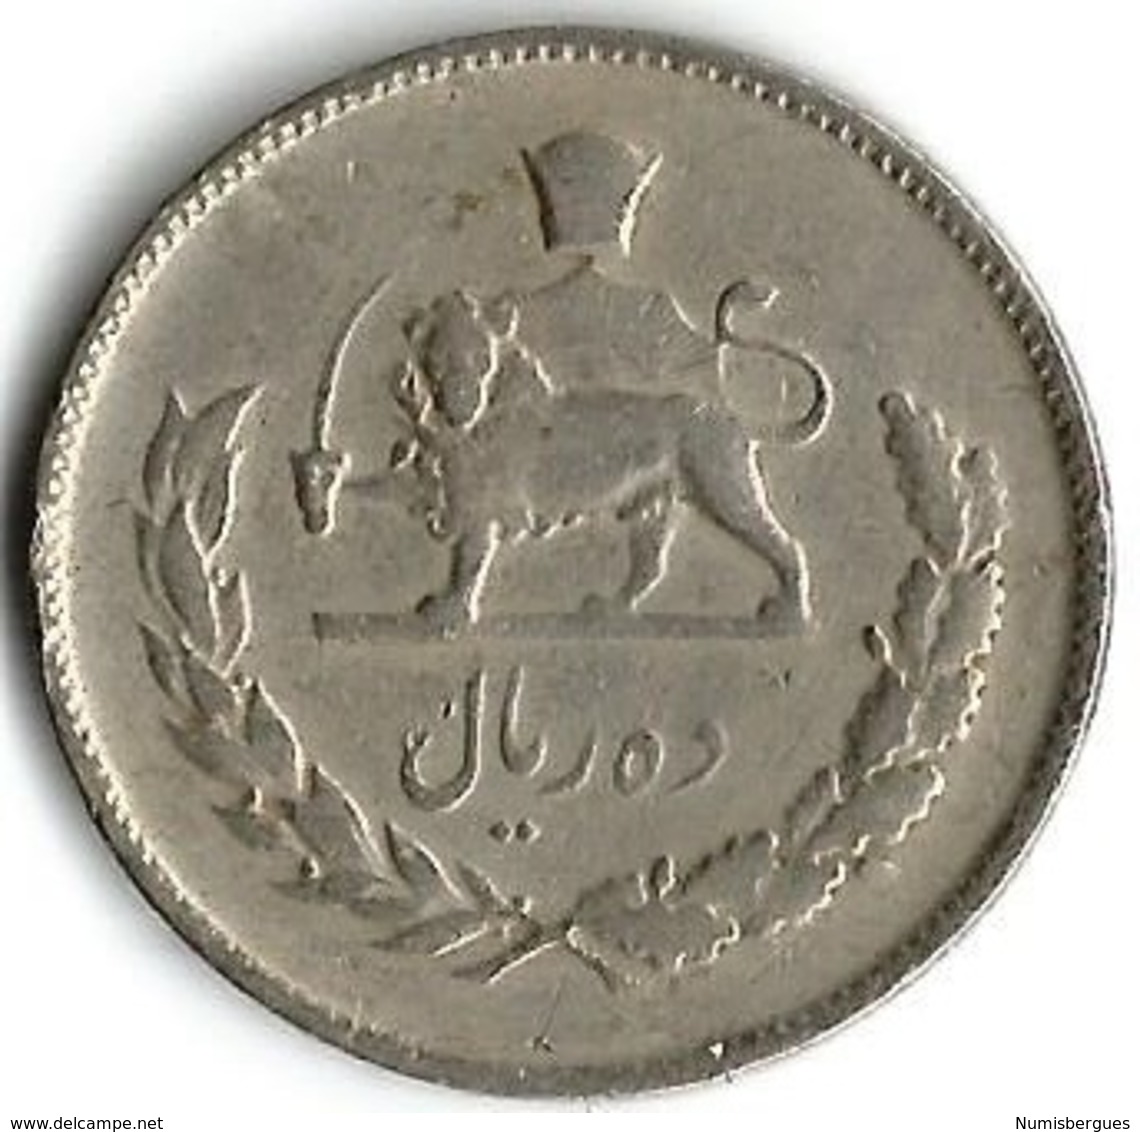 1 Pièce De Monnaie 10 Rials 1967 - Iran